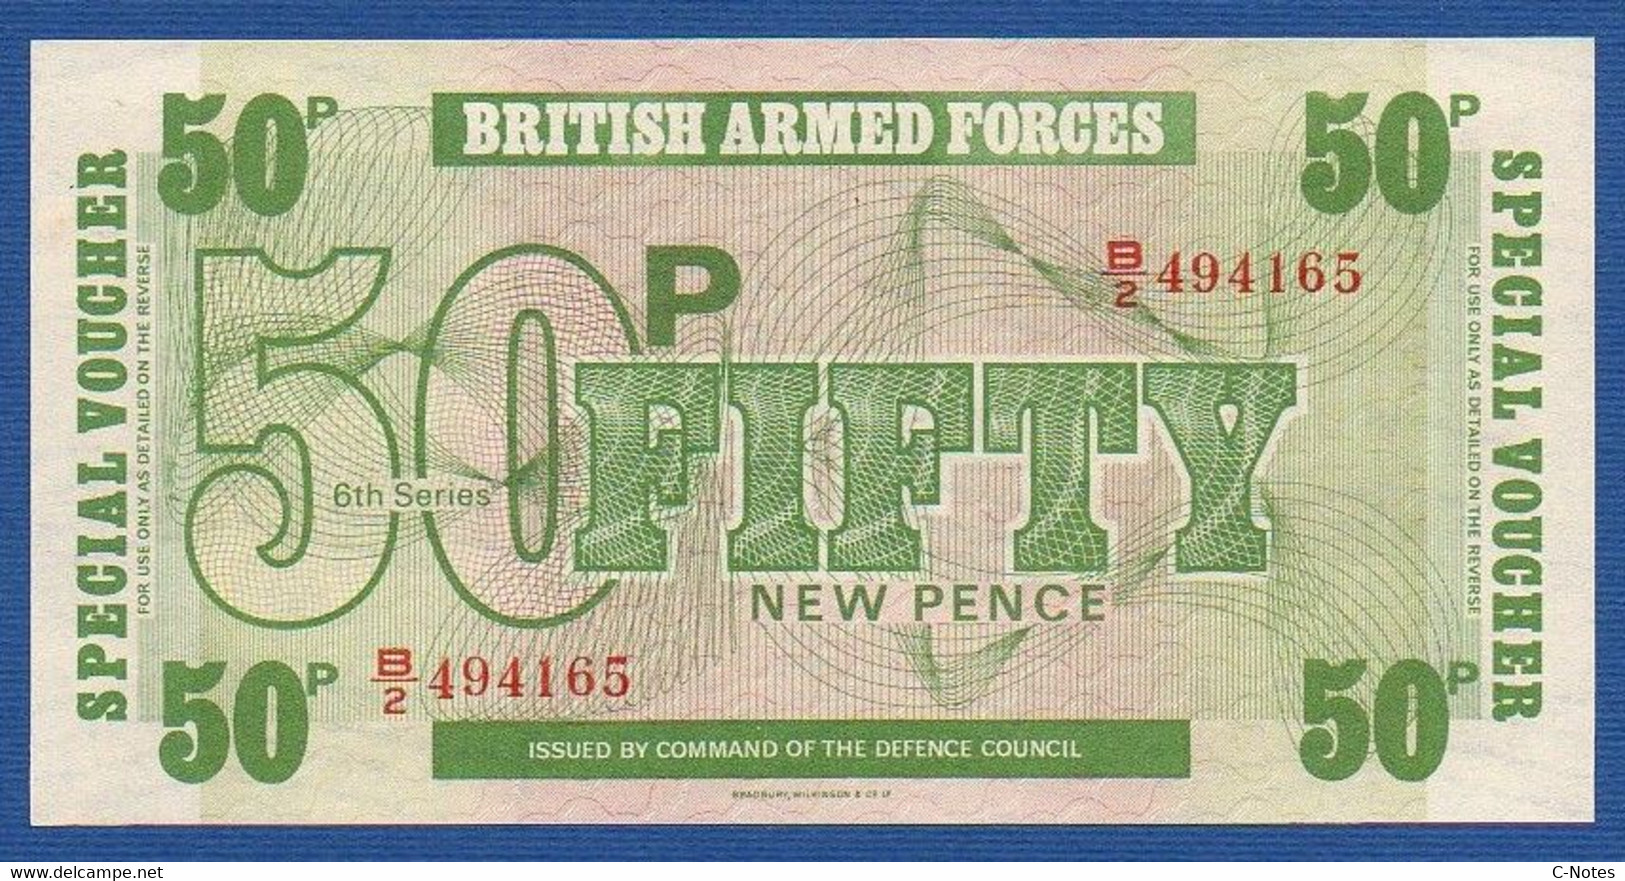 GREAT BRITAIN - P.M49 – 50 New Pence ND (1972) UNC-, Serie B/2 494165, Printer Bradbury Wilkinson, New Malden - British Troepen & Speciale Documenten